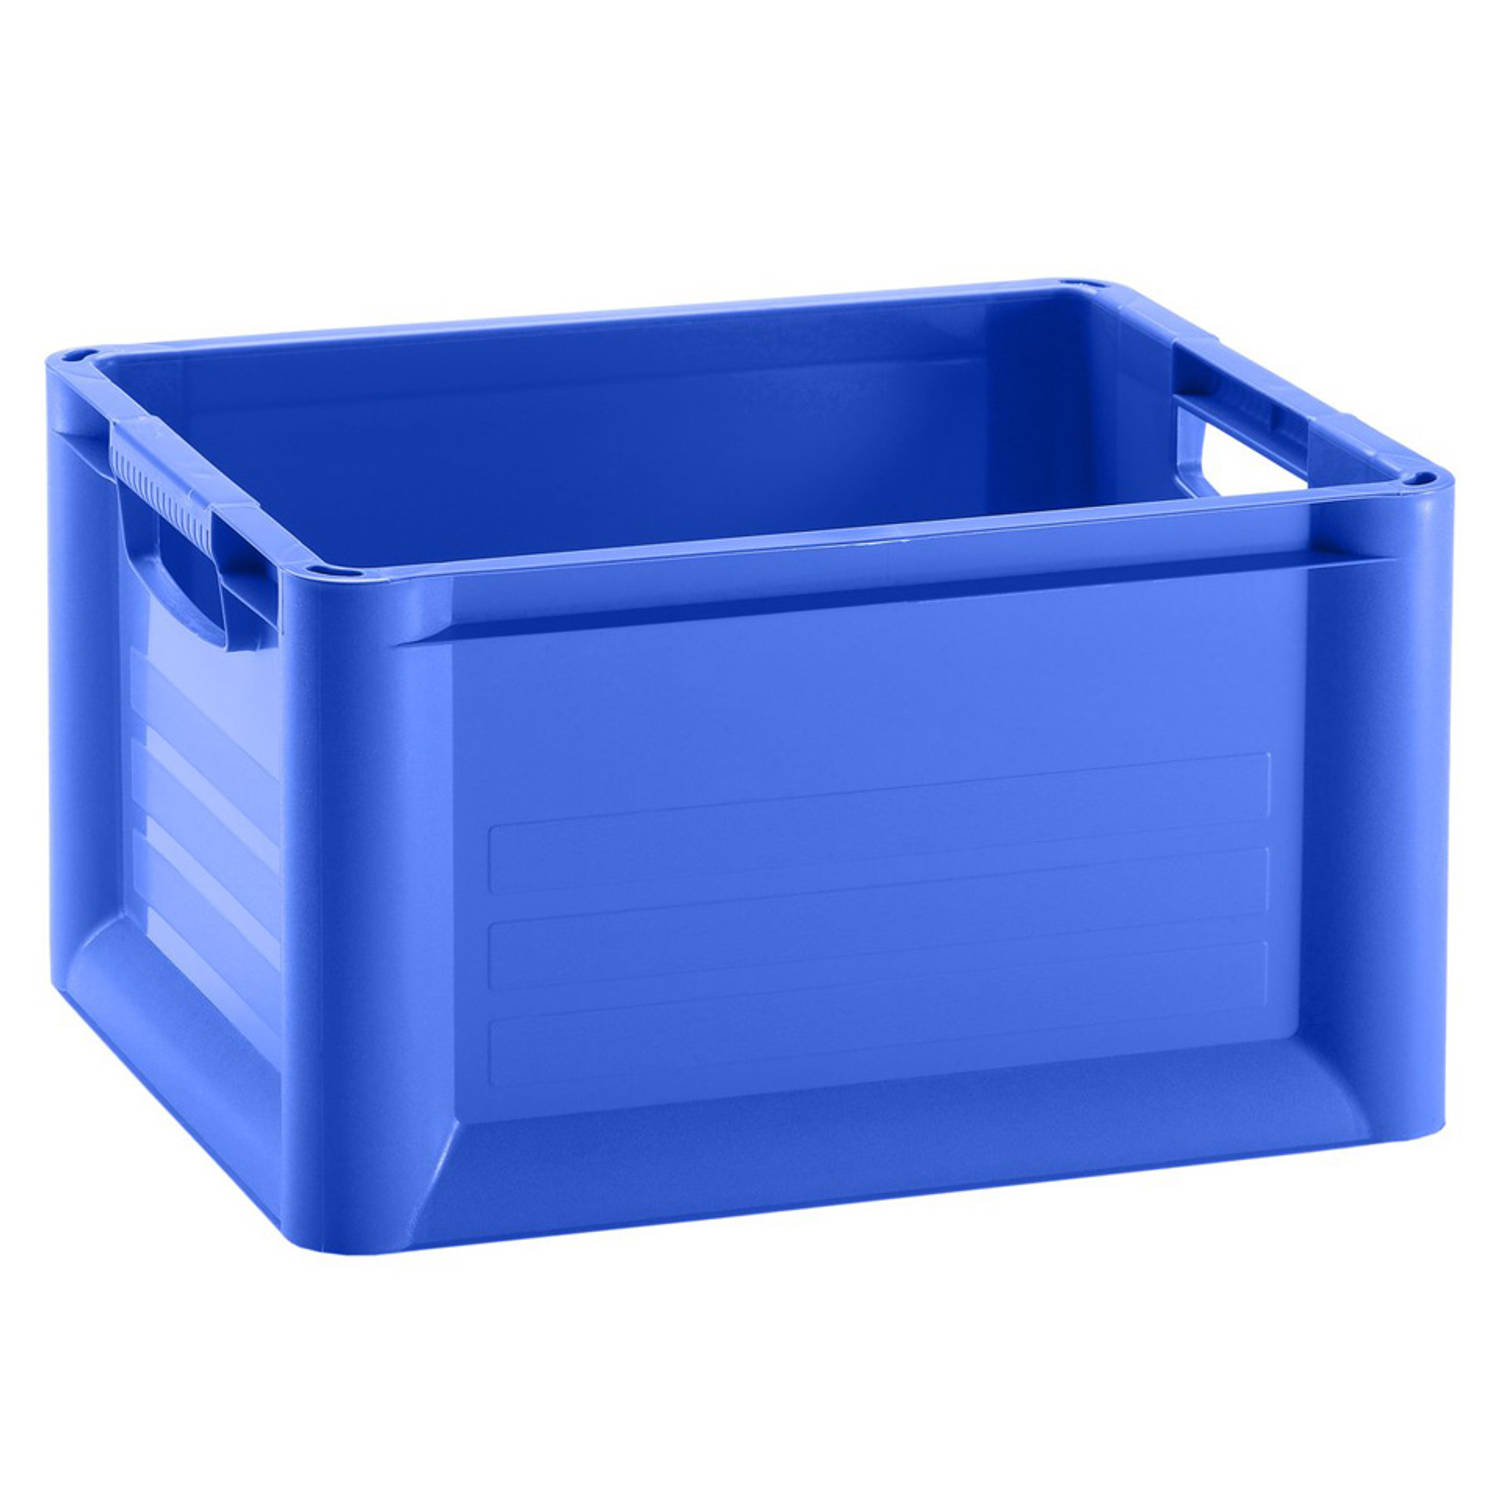 Blind vertrouwen Politiek Fabel Curver Unibox 2nd Generation opbergbox 30 liter - blauw | Blokker